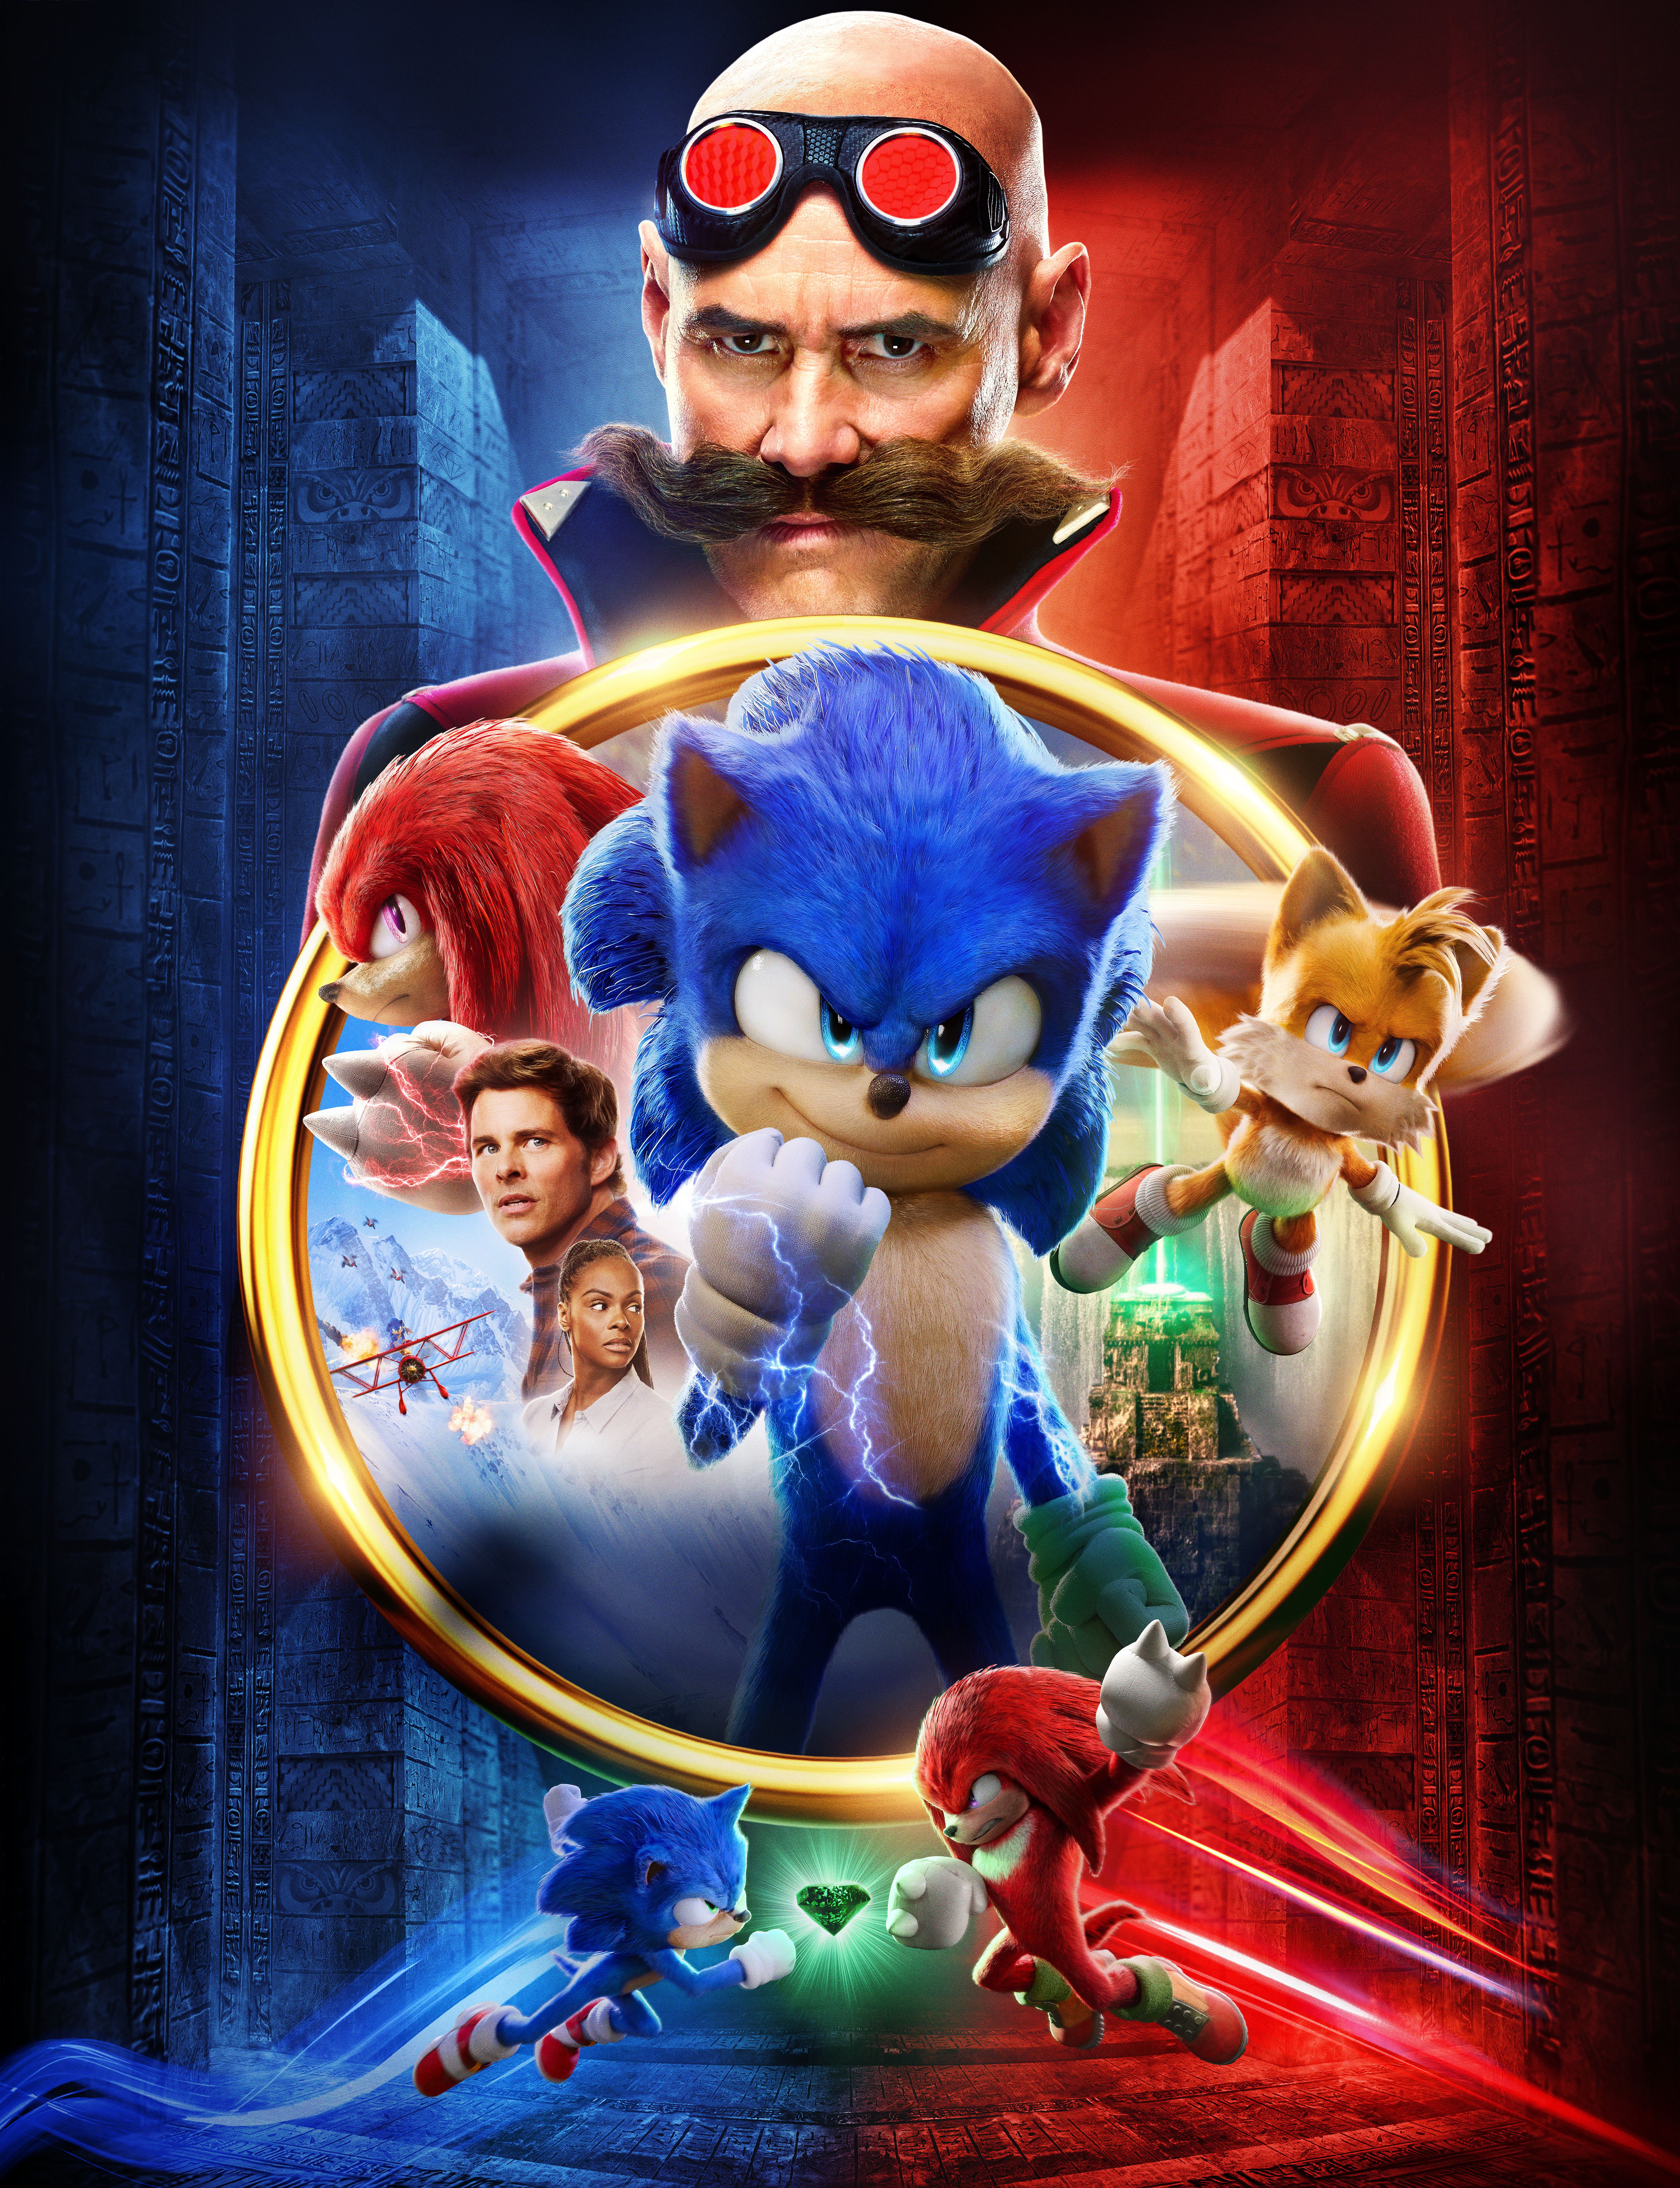 Sonic the Hedgehog 2 Wallpaper 4K, 2022 Movies, Jim Carrey, James Marsden, Movies